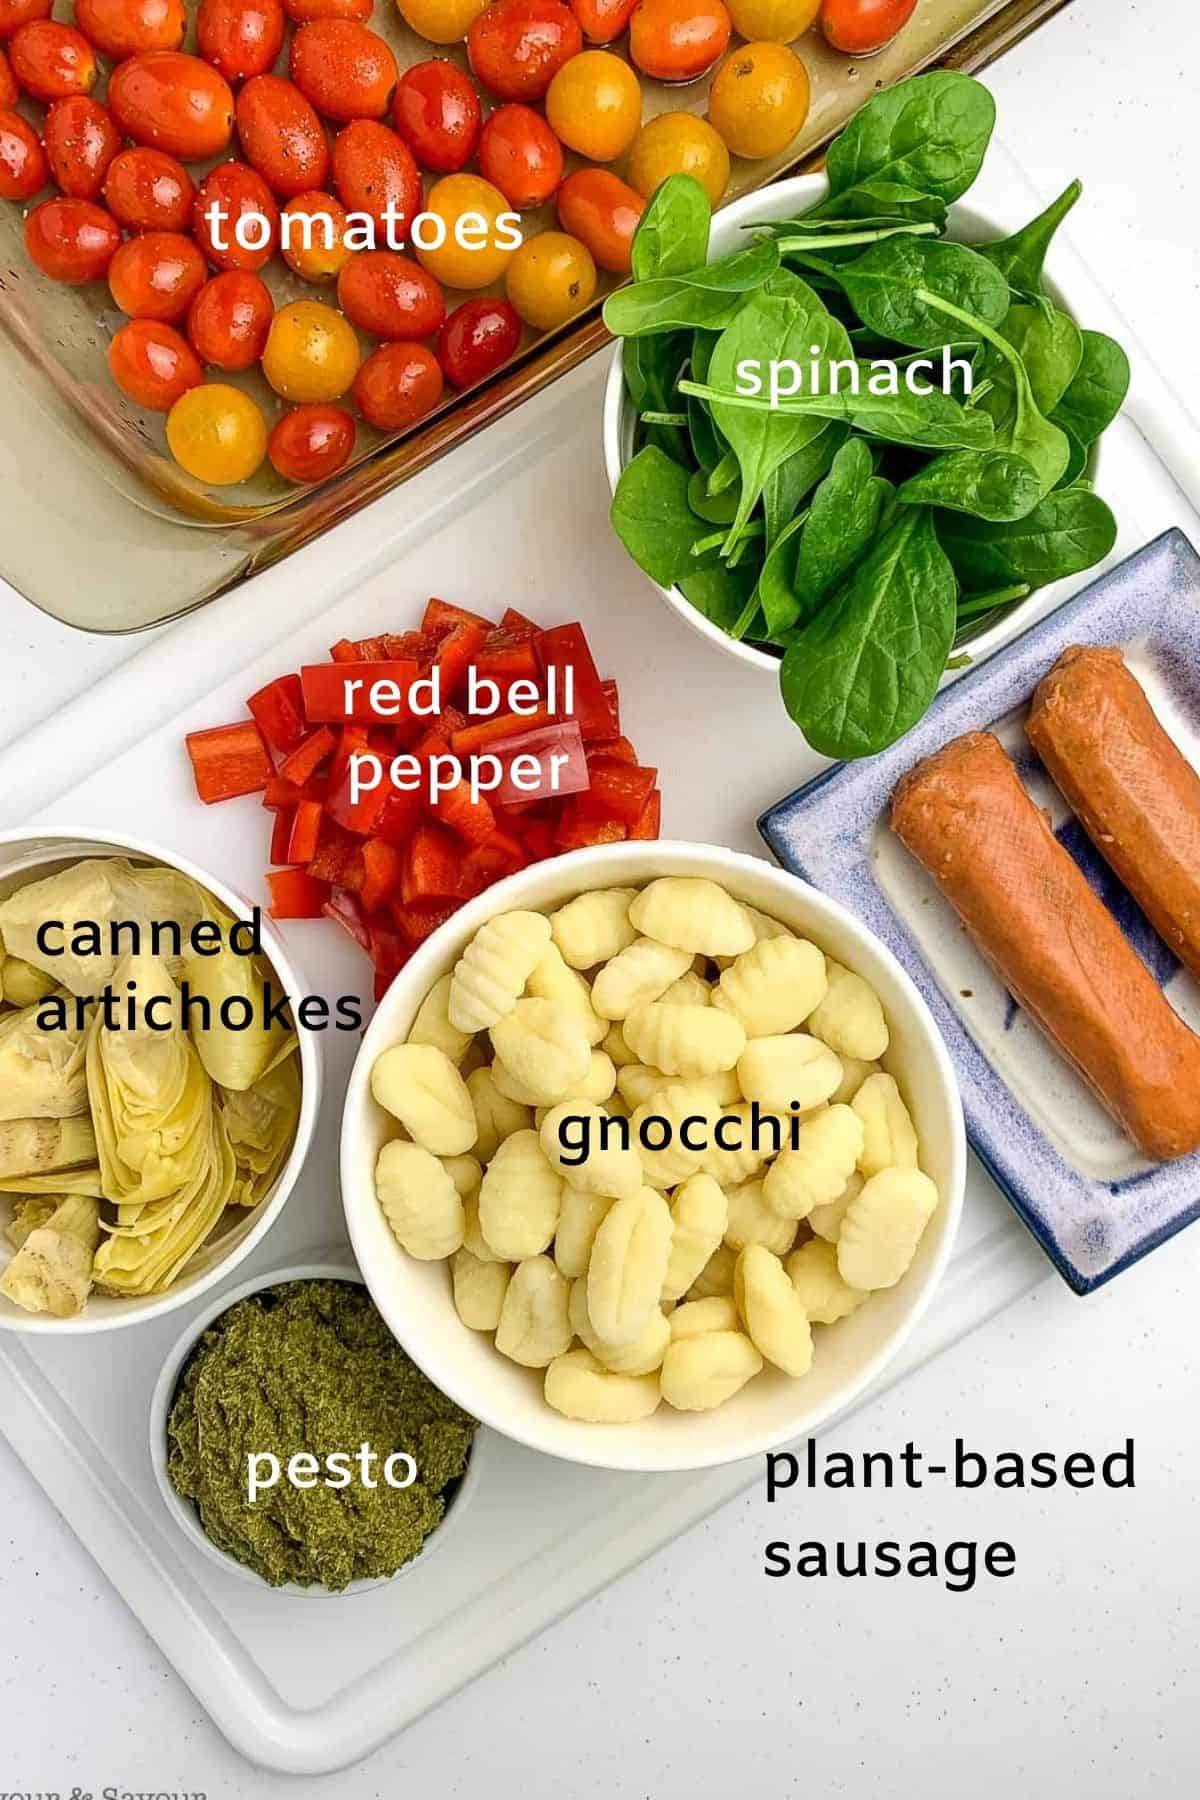 Labelled ingredients for vegetarian pesto gnocchi recipe.